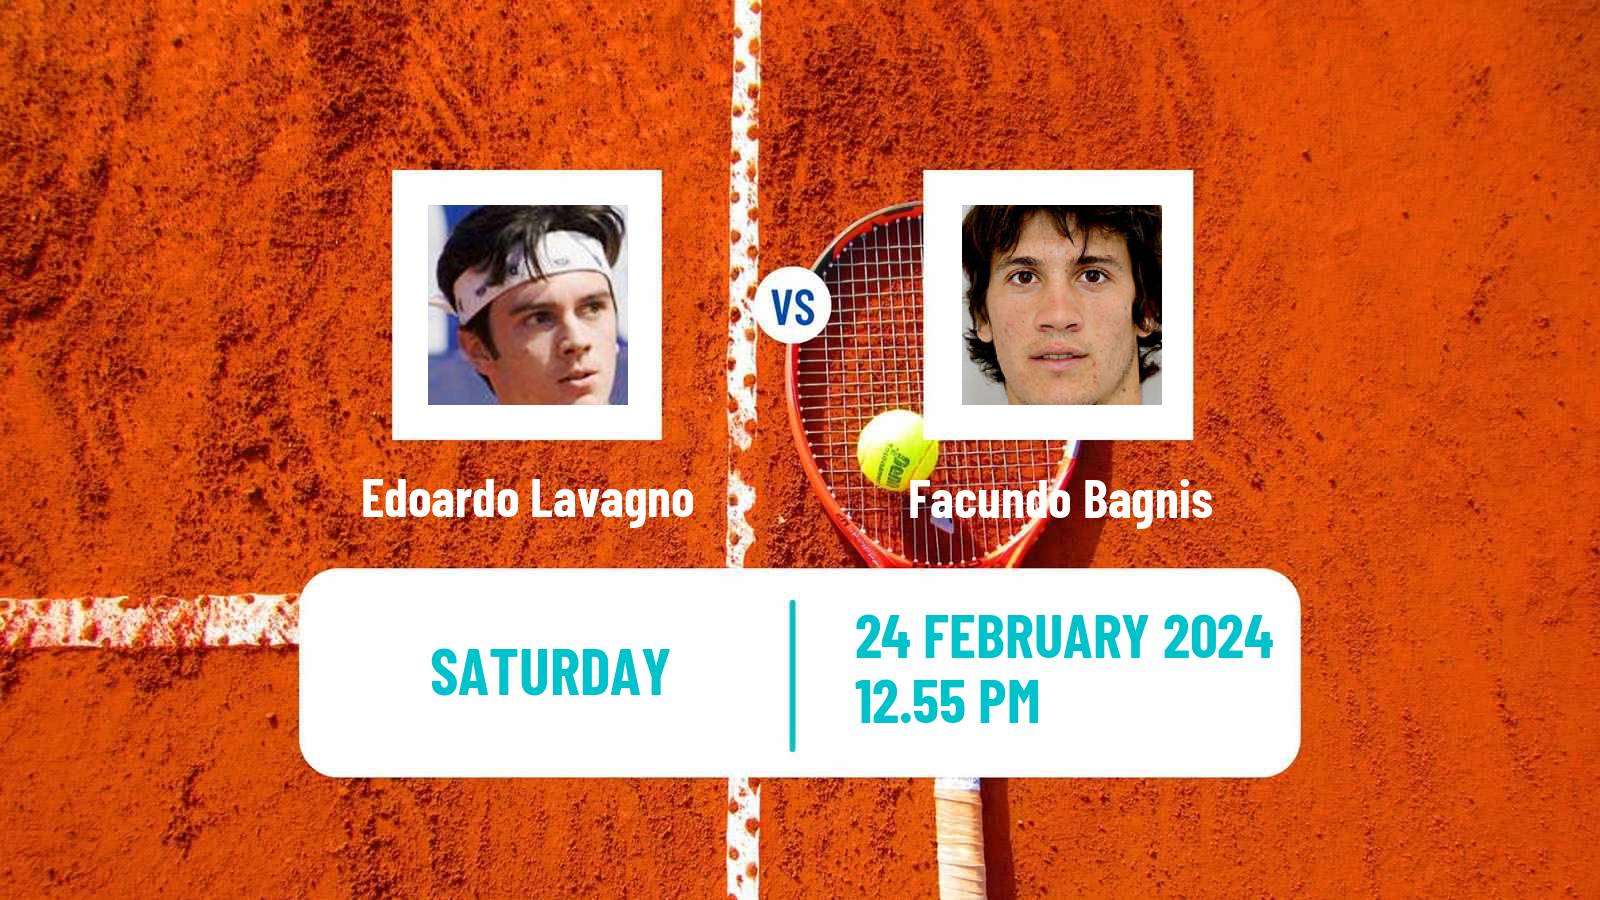 Tennis ATP Santiago Edoardo Lavagno - Facundo Bagnis